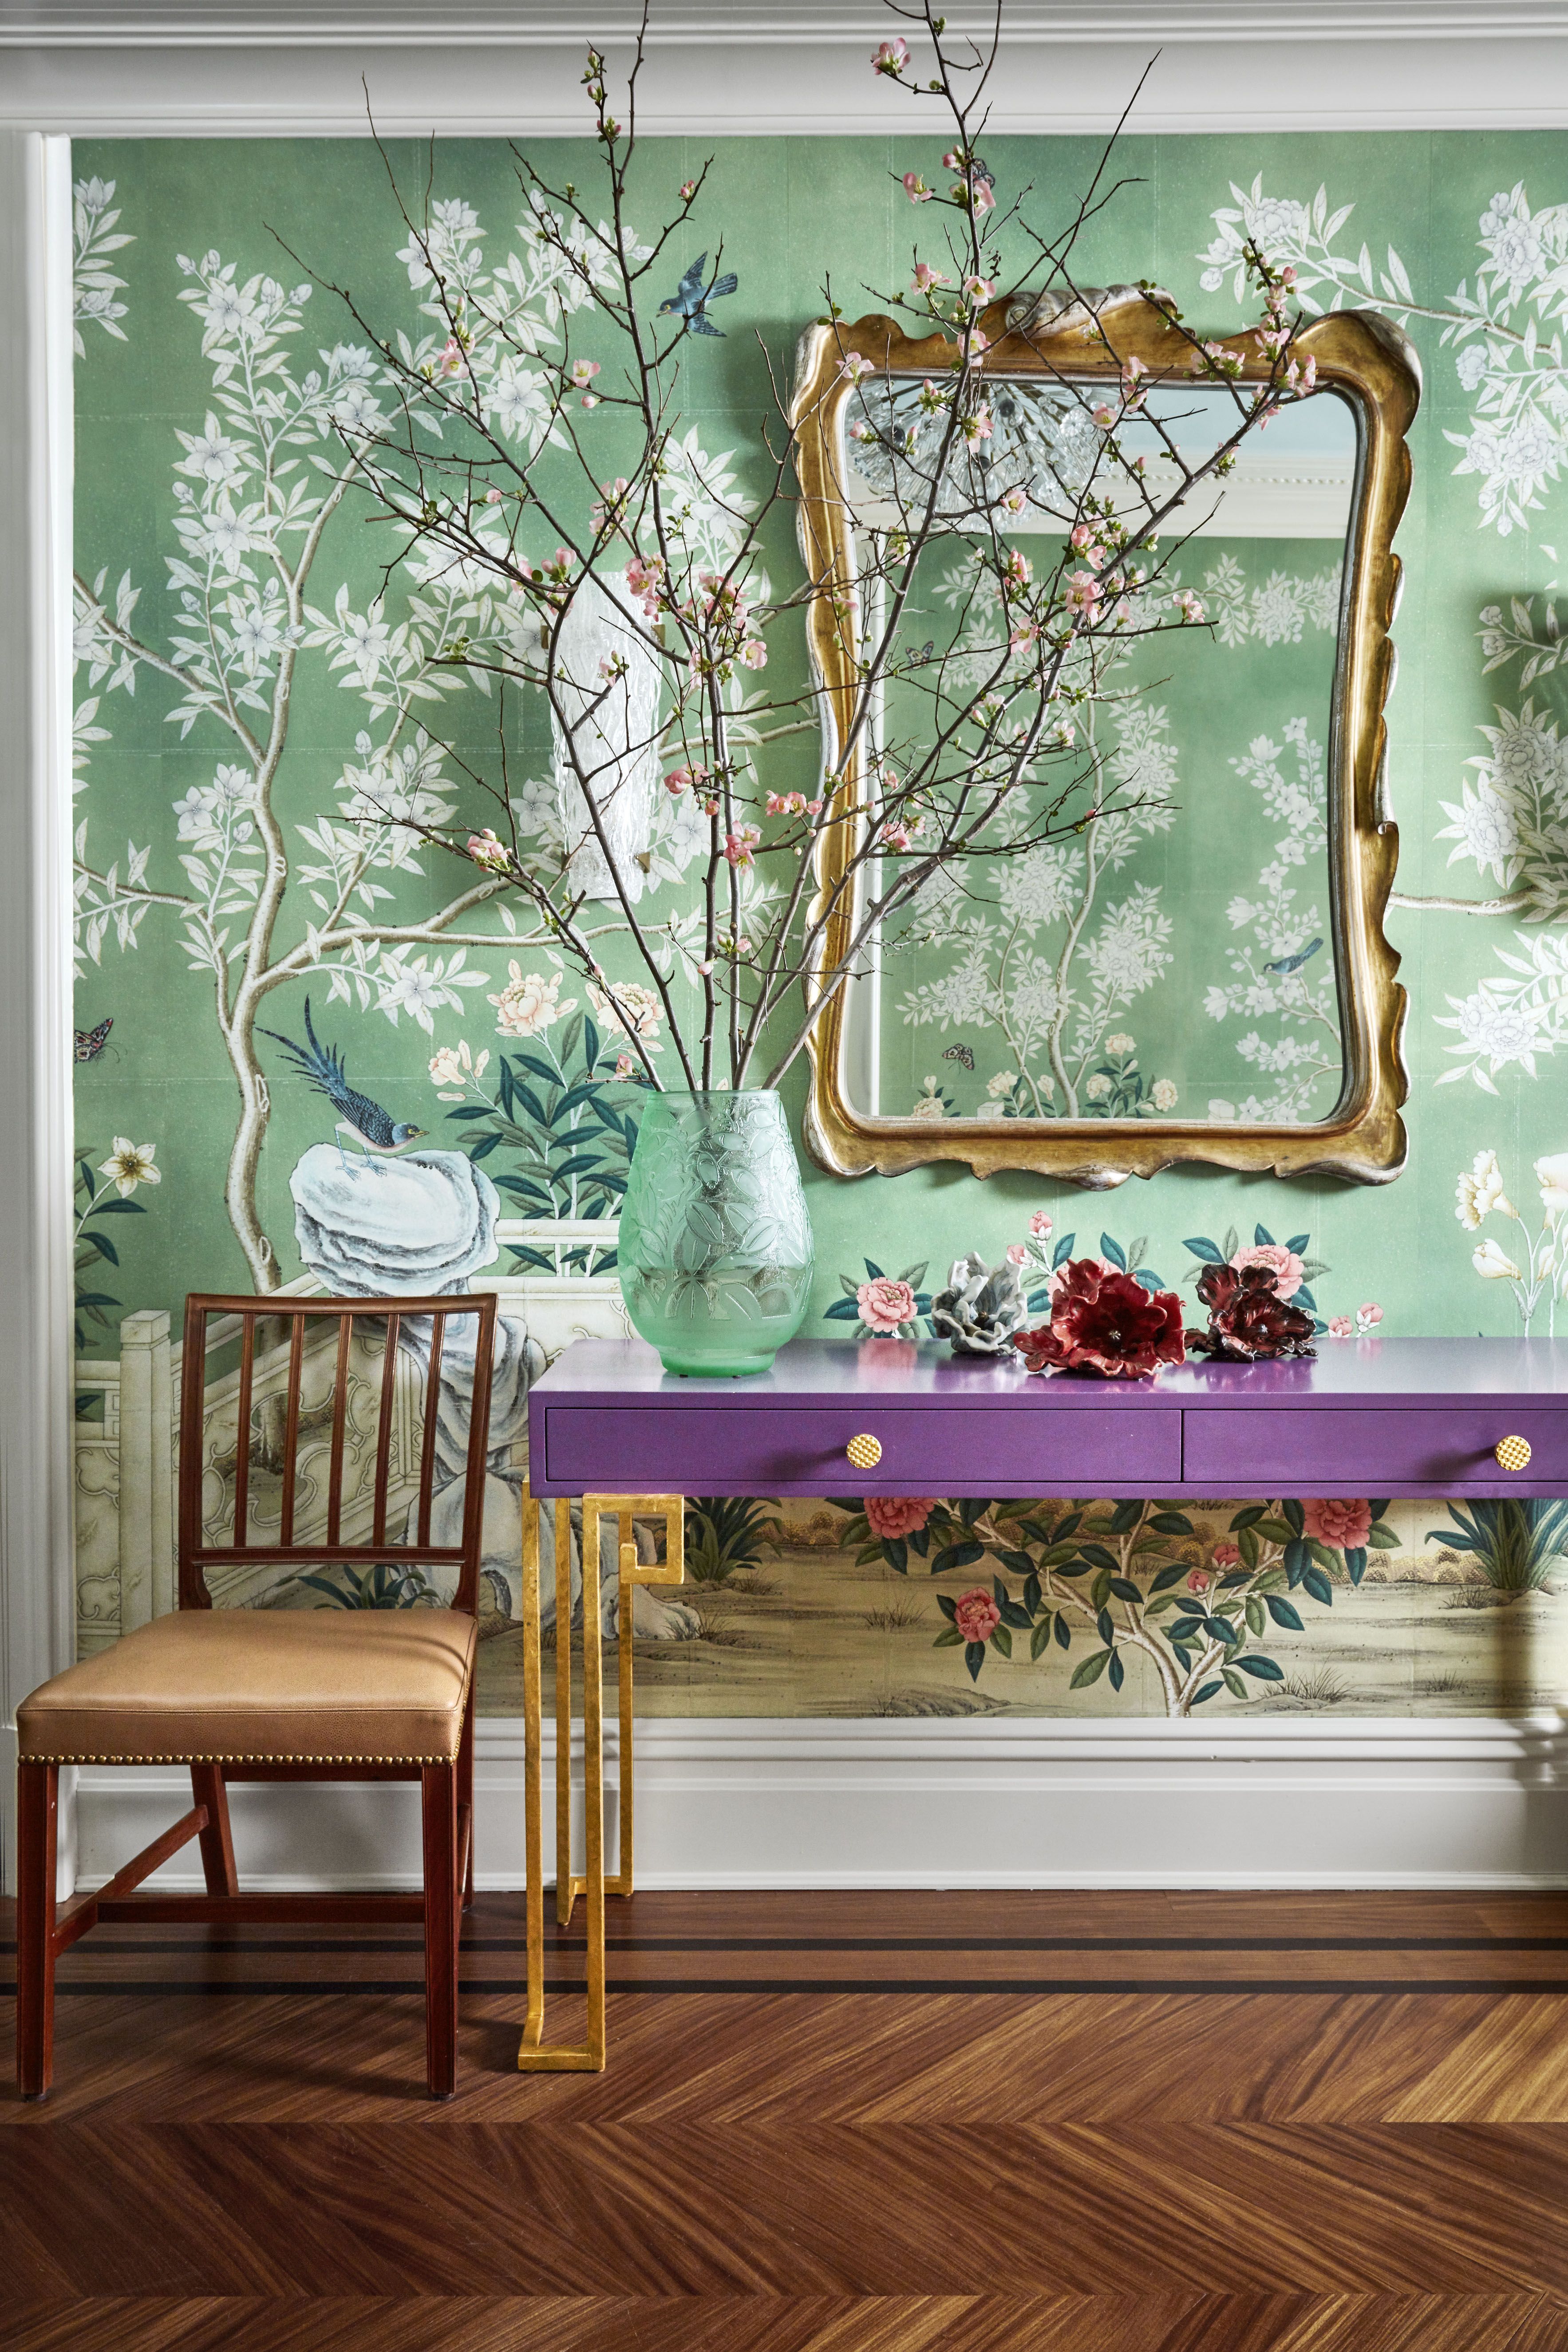 Branch, Green, Room, Twig, Furniture, Tree, Interior design, Table, Wall, Wallpaper, 